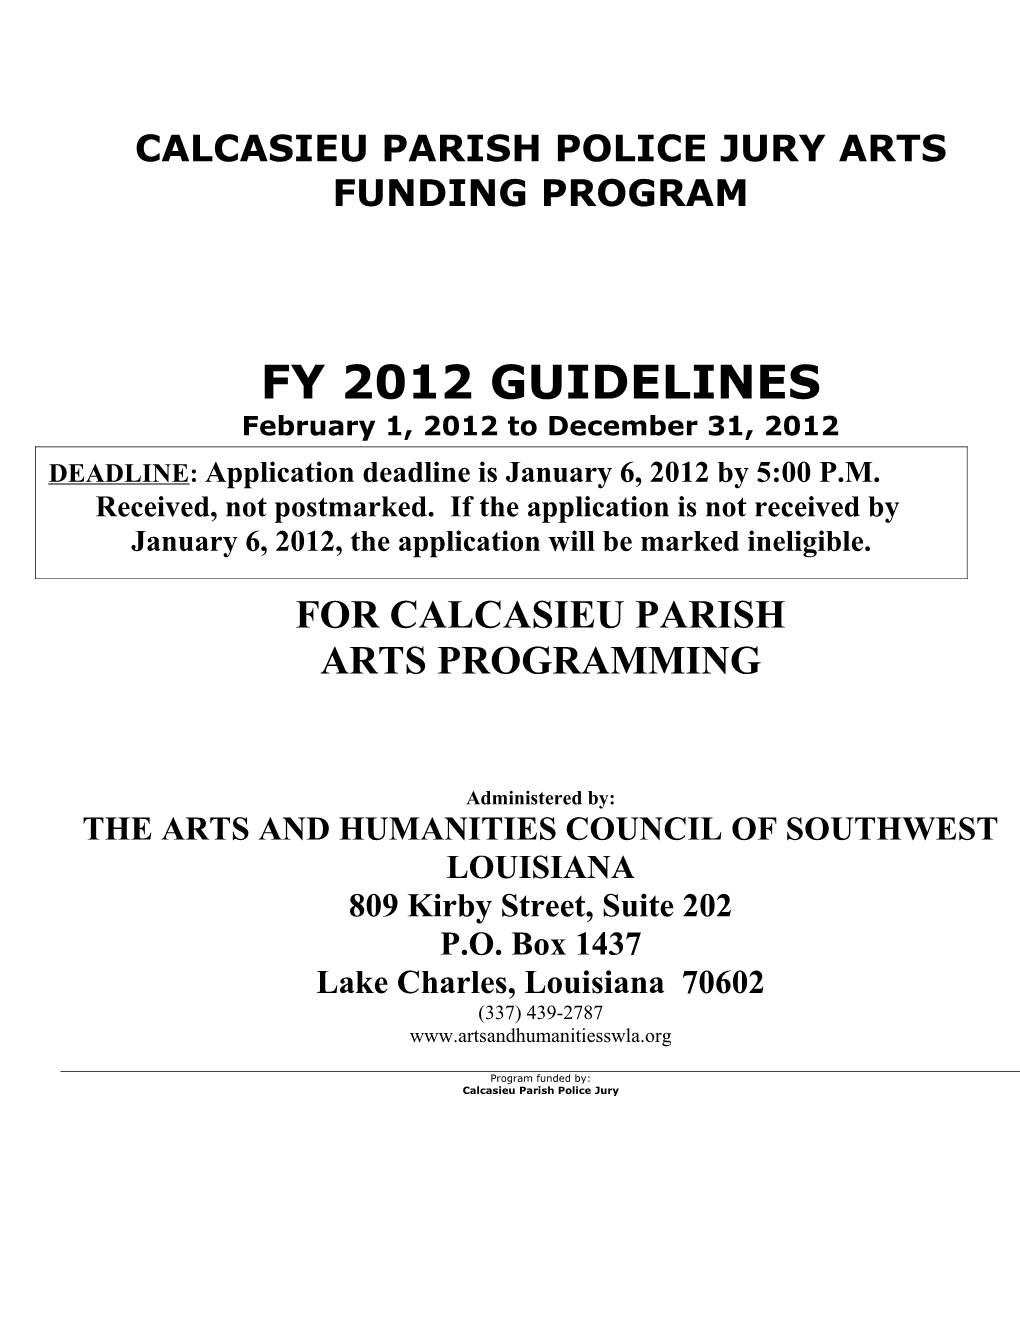 Calcasieu Parish Police Jury Arts Funding Program